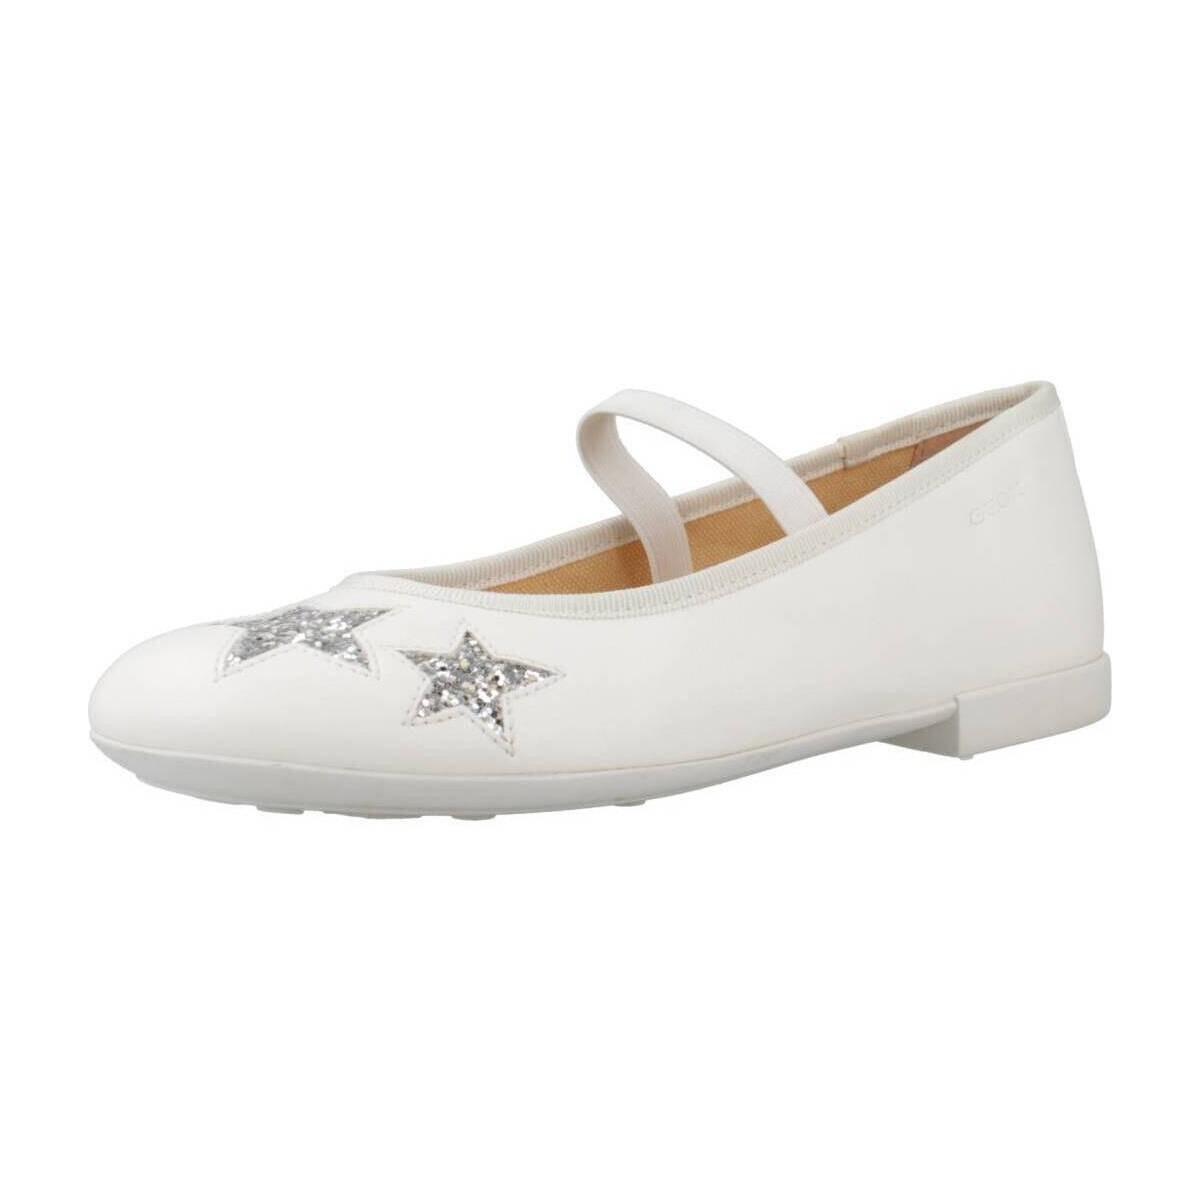 Sapatos Rapariga Sapatos & Richelieu Geox JR PLIE' Branco